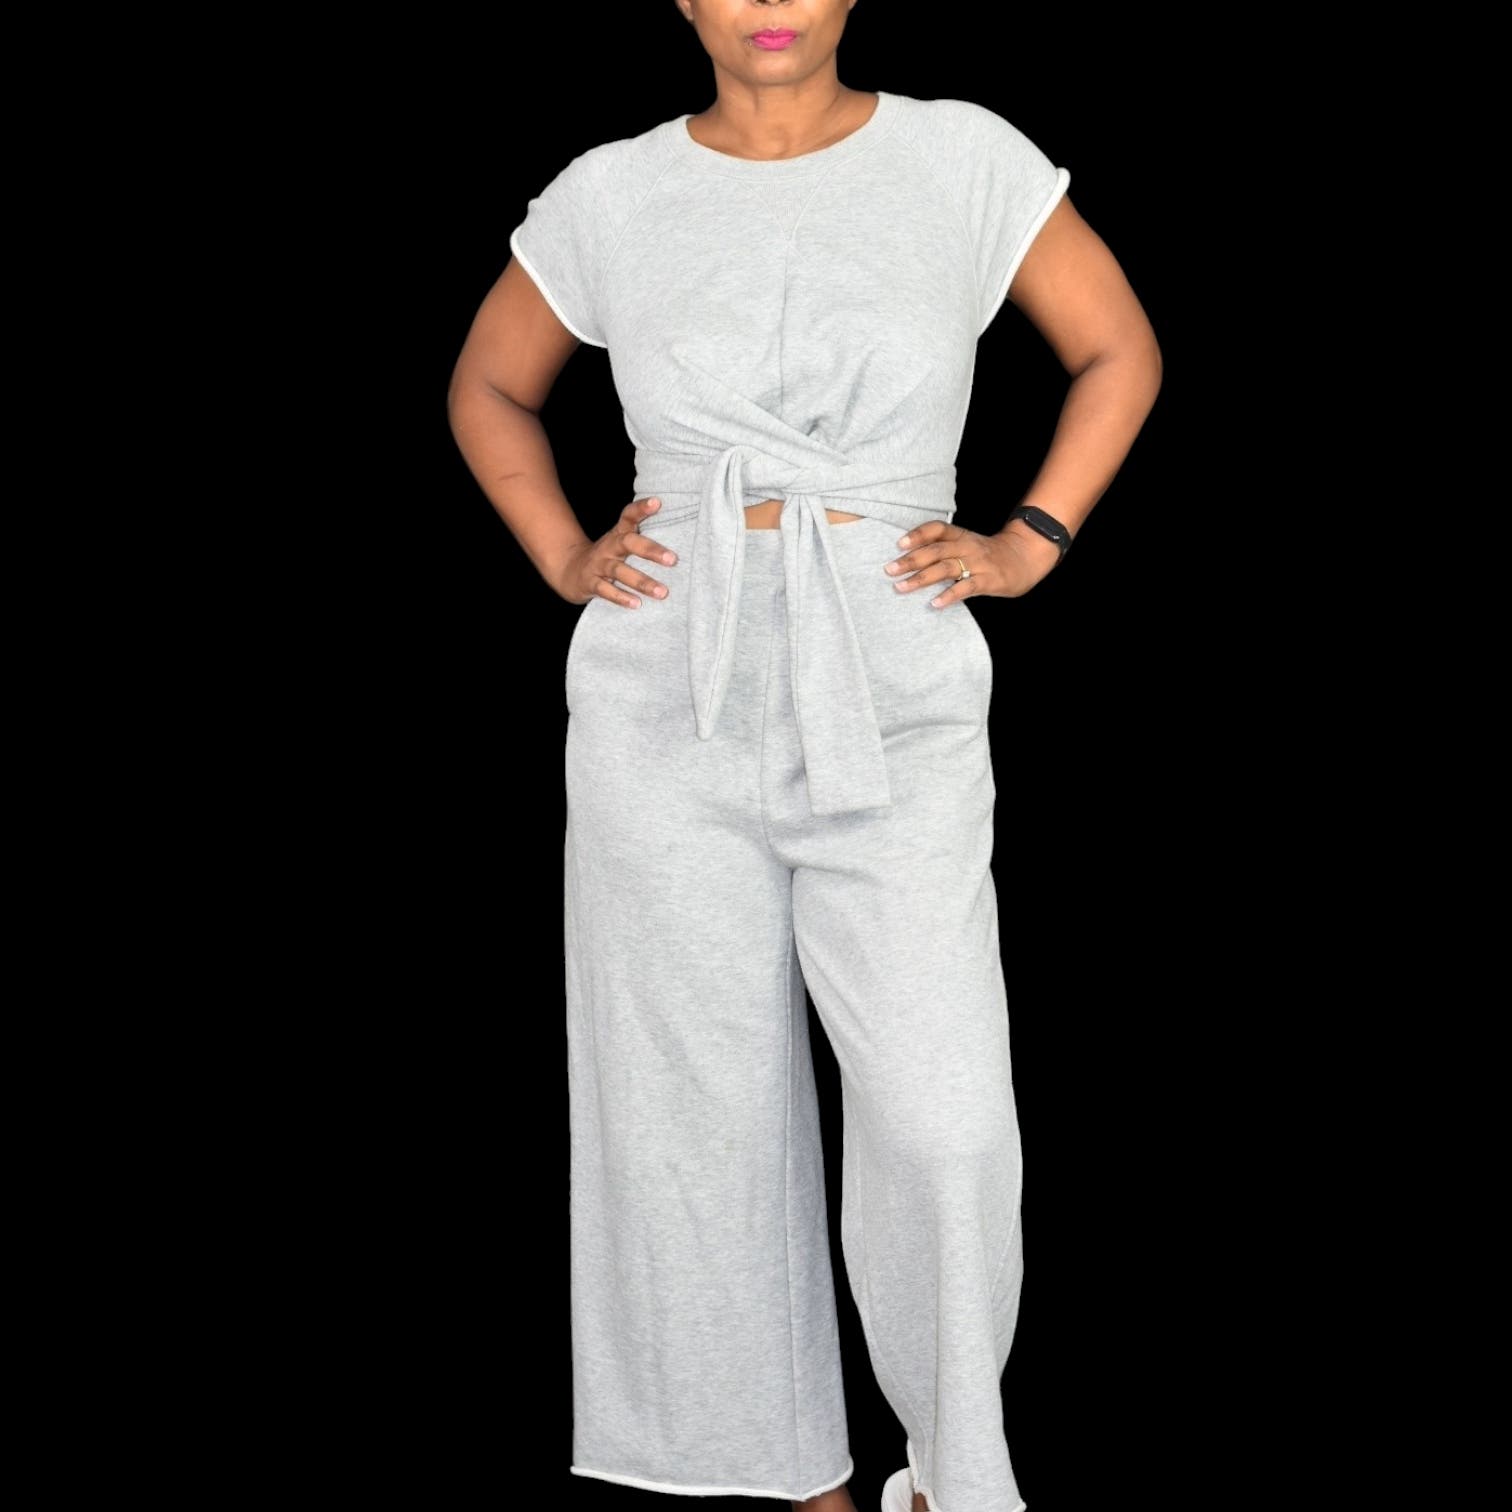 Rachel Roy Iona Wide Leg Jumpsuit Grey Sweatshirt Jersey Cutout Cotton Cropped Size Medium